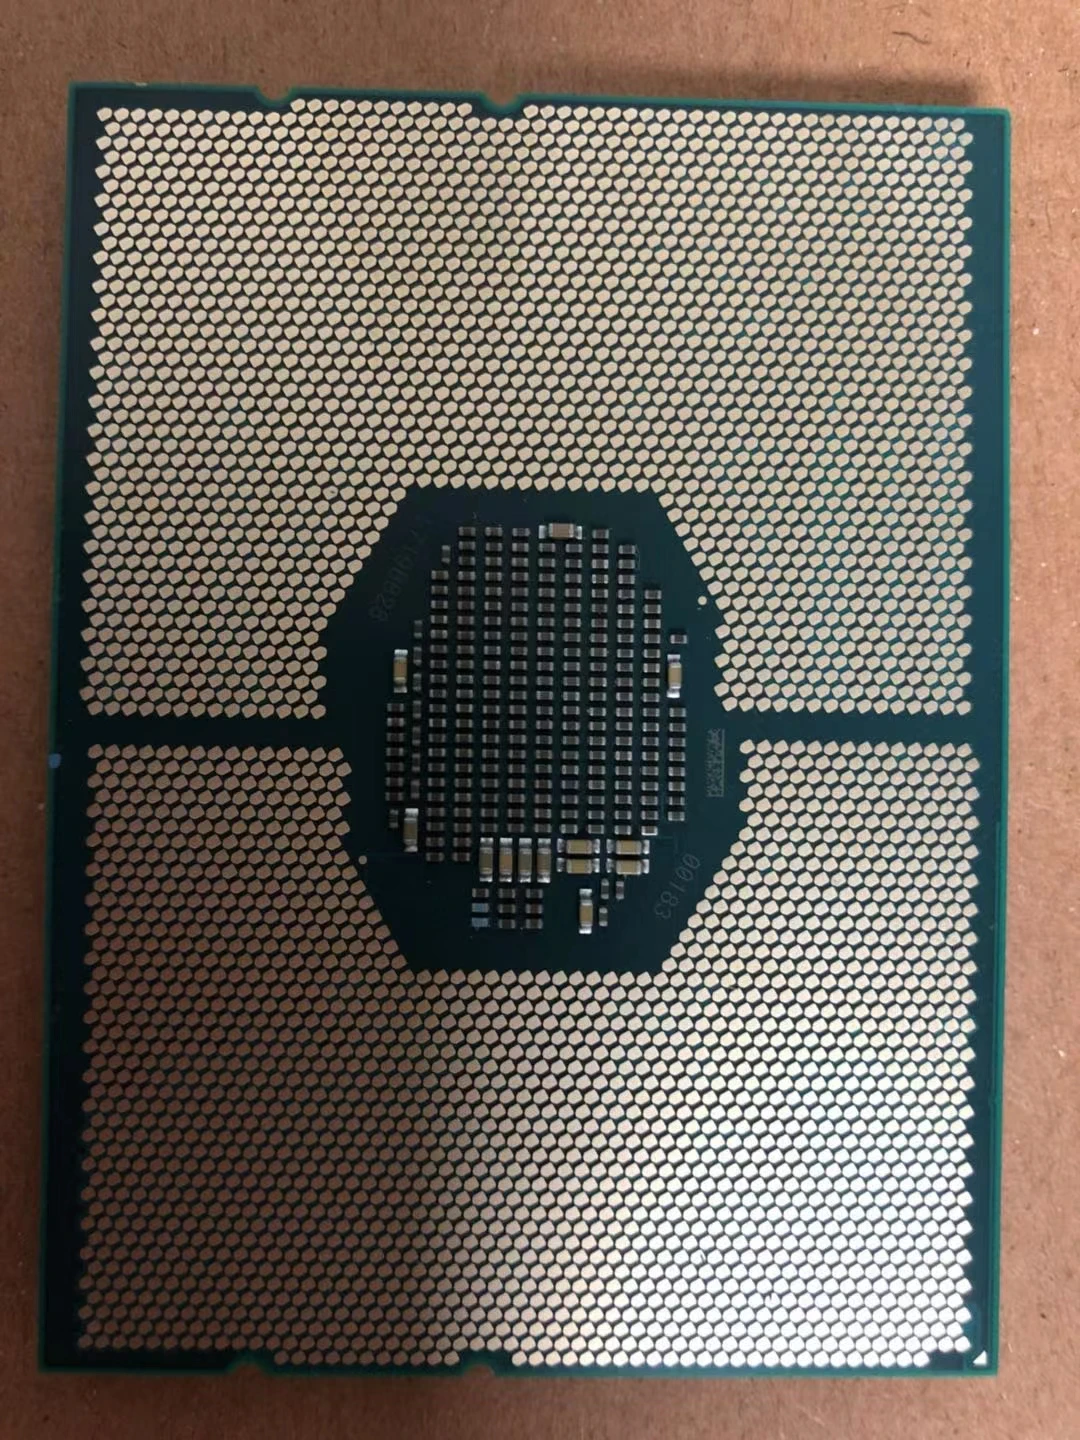 Intel xeon platinum 8180. Intel Xeon Silver 4215r. Intel Xeon Bronze 3106. Xeon e 2186. Intel Xeon Bronze 3106 (cd8067303561900).